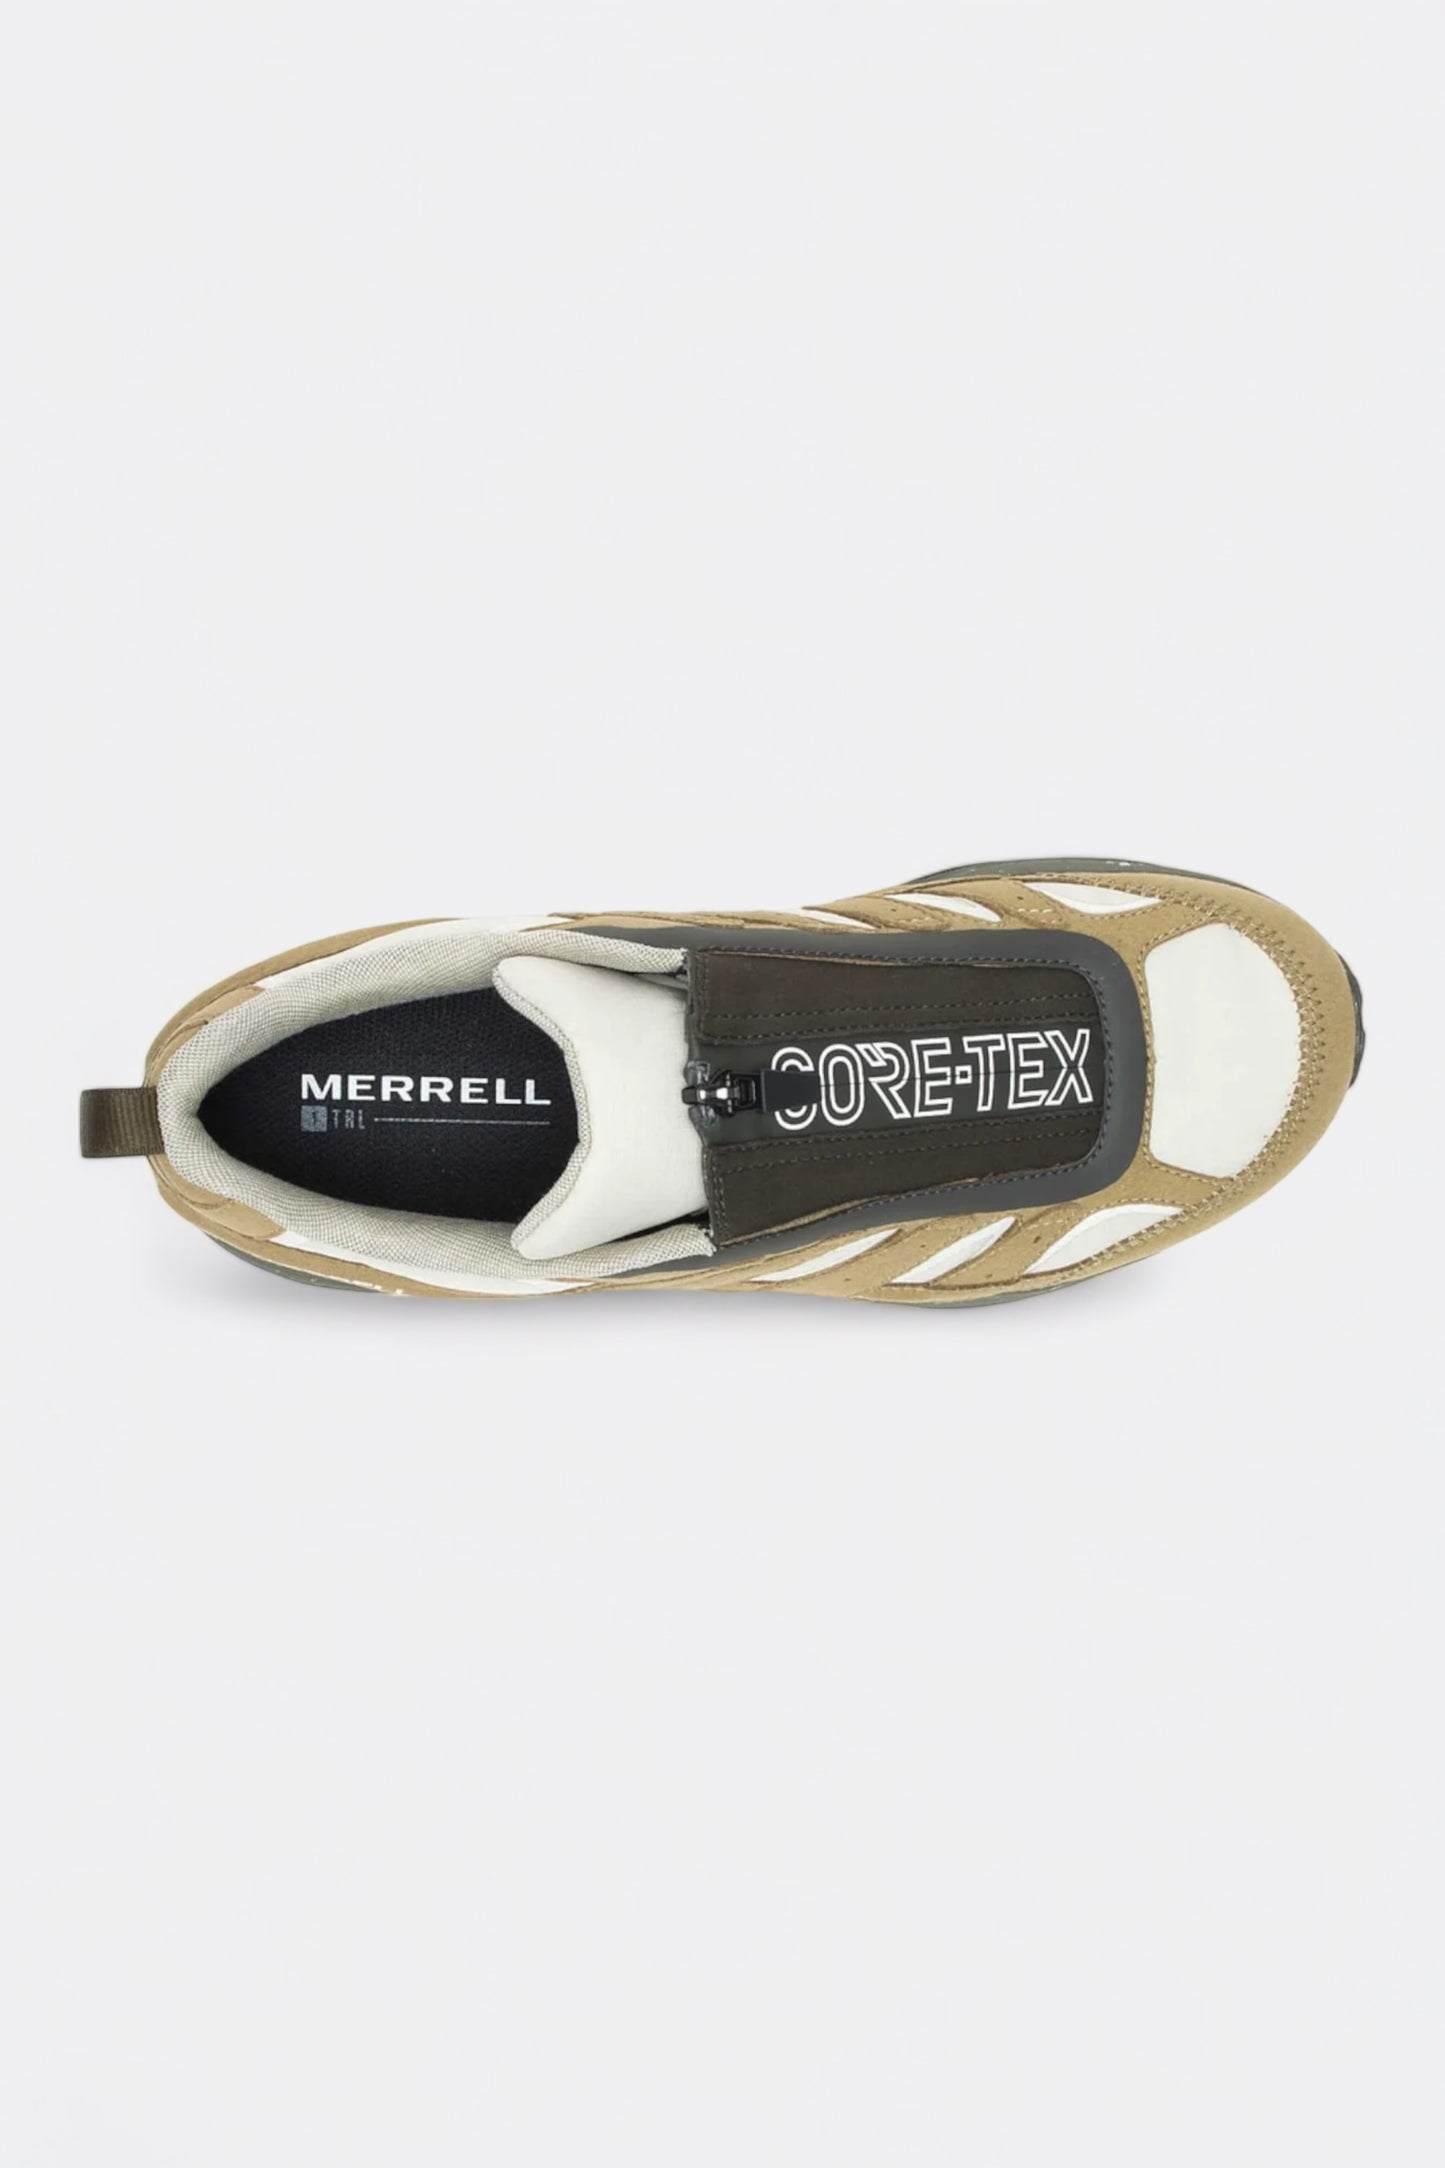 Merrell - Moab Speed Zip GTX SE (Coyote / Olive)